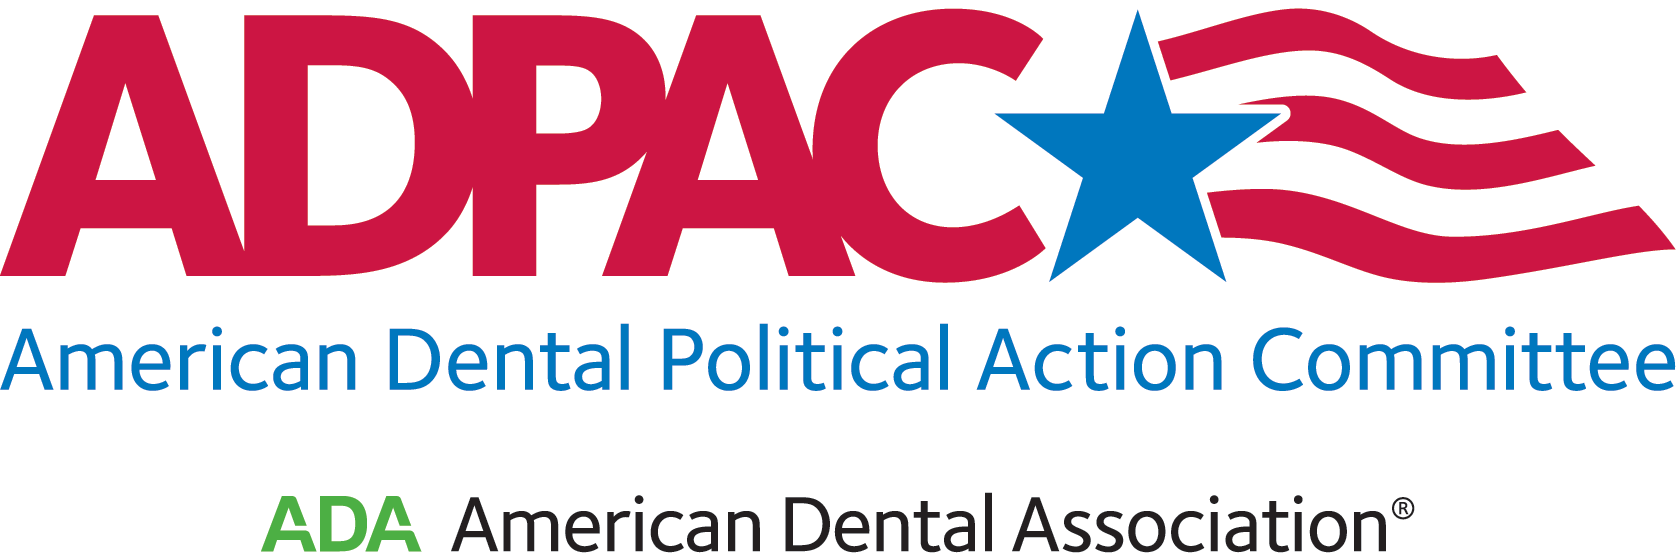 American Dental PAC logo